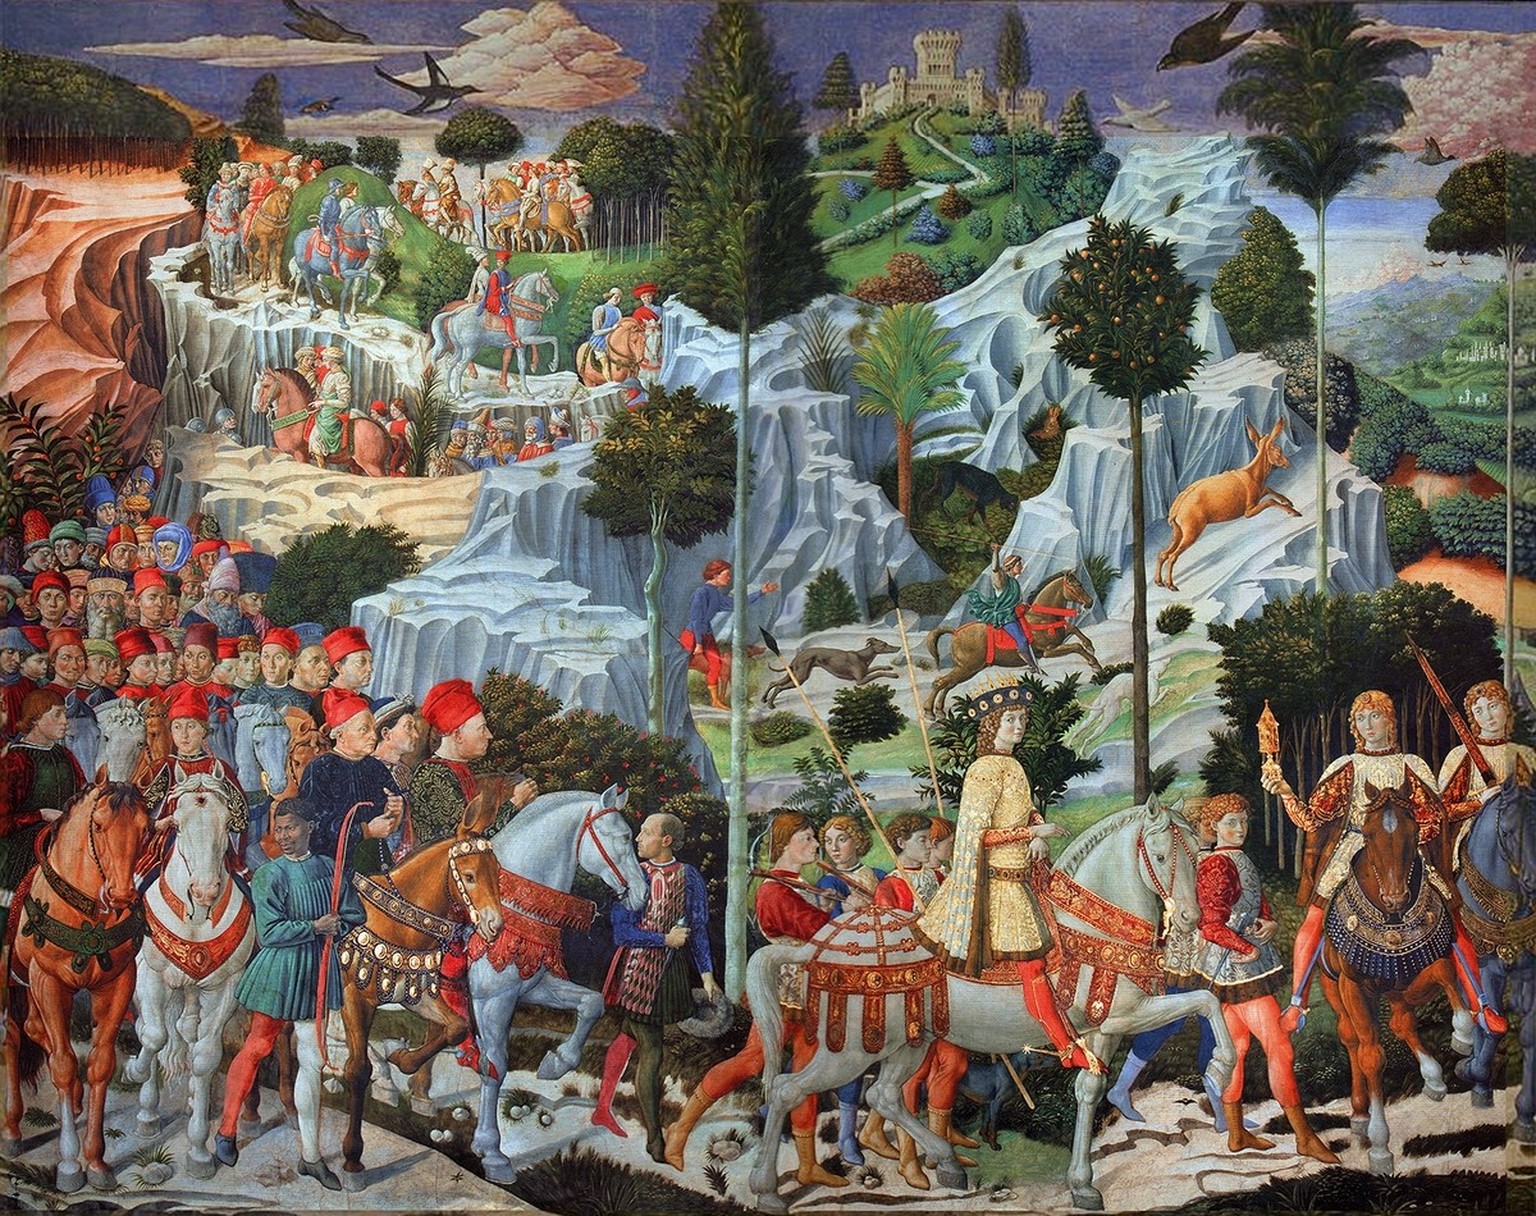 Zug der Heiligen Drei Könige von Benozzo Gozzoli, um 1460.
https://commons.wikimedia.org/wiki/File:Gozzoli_magi.jpg